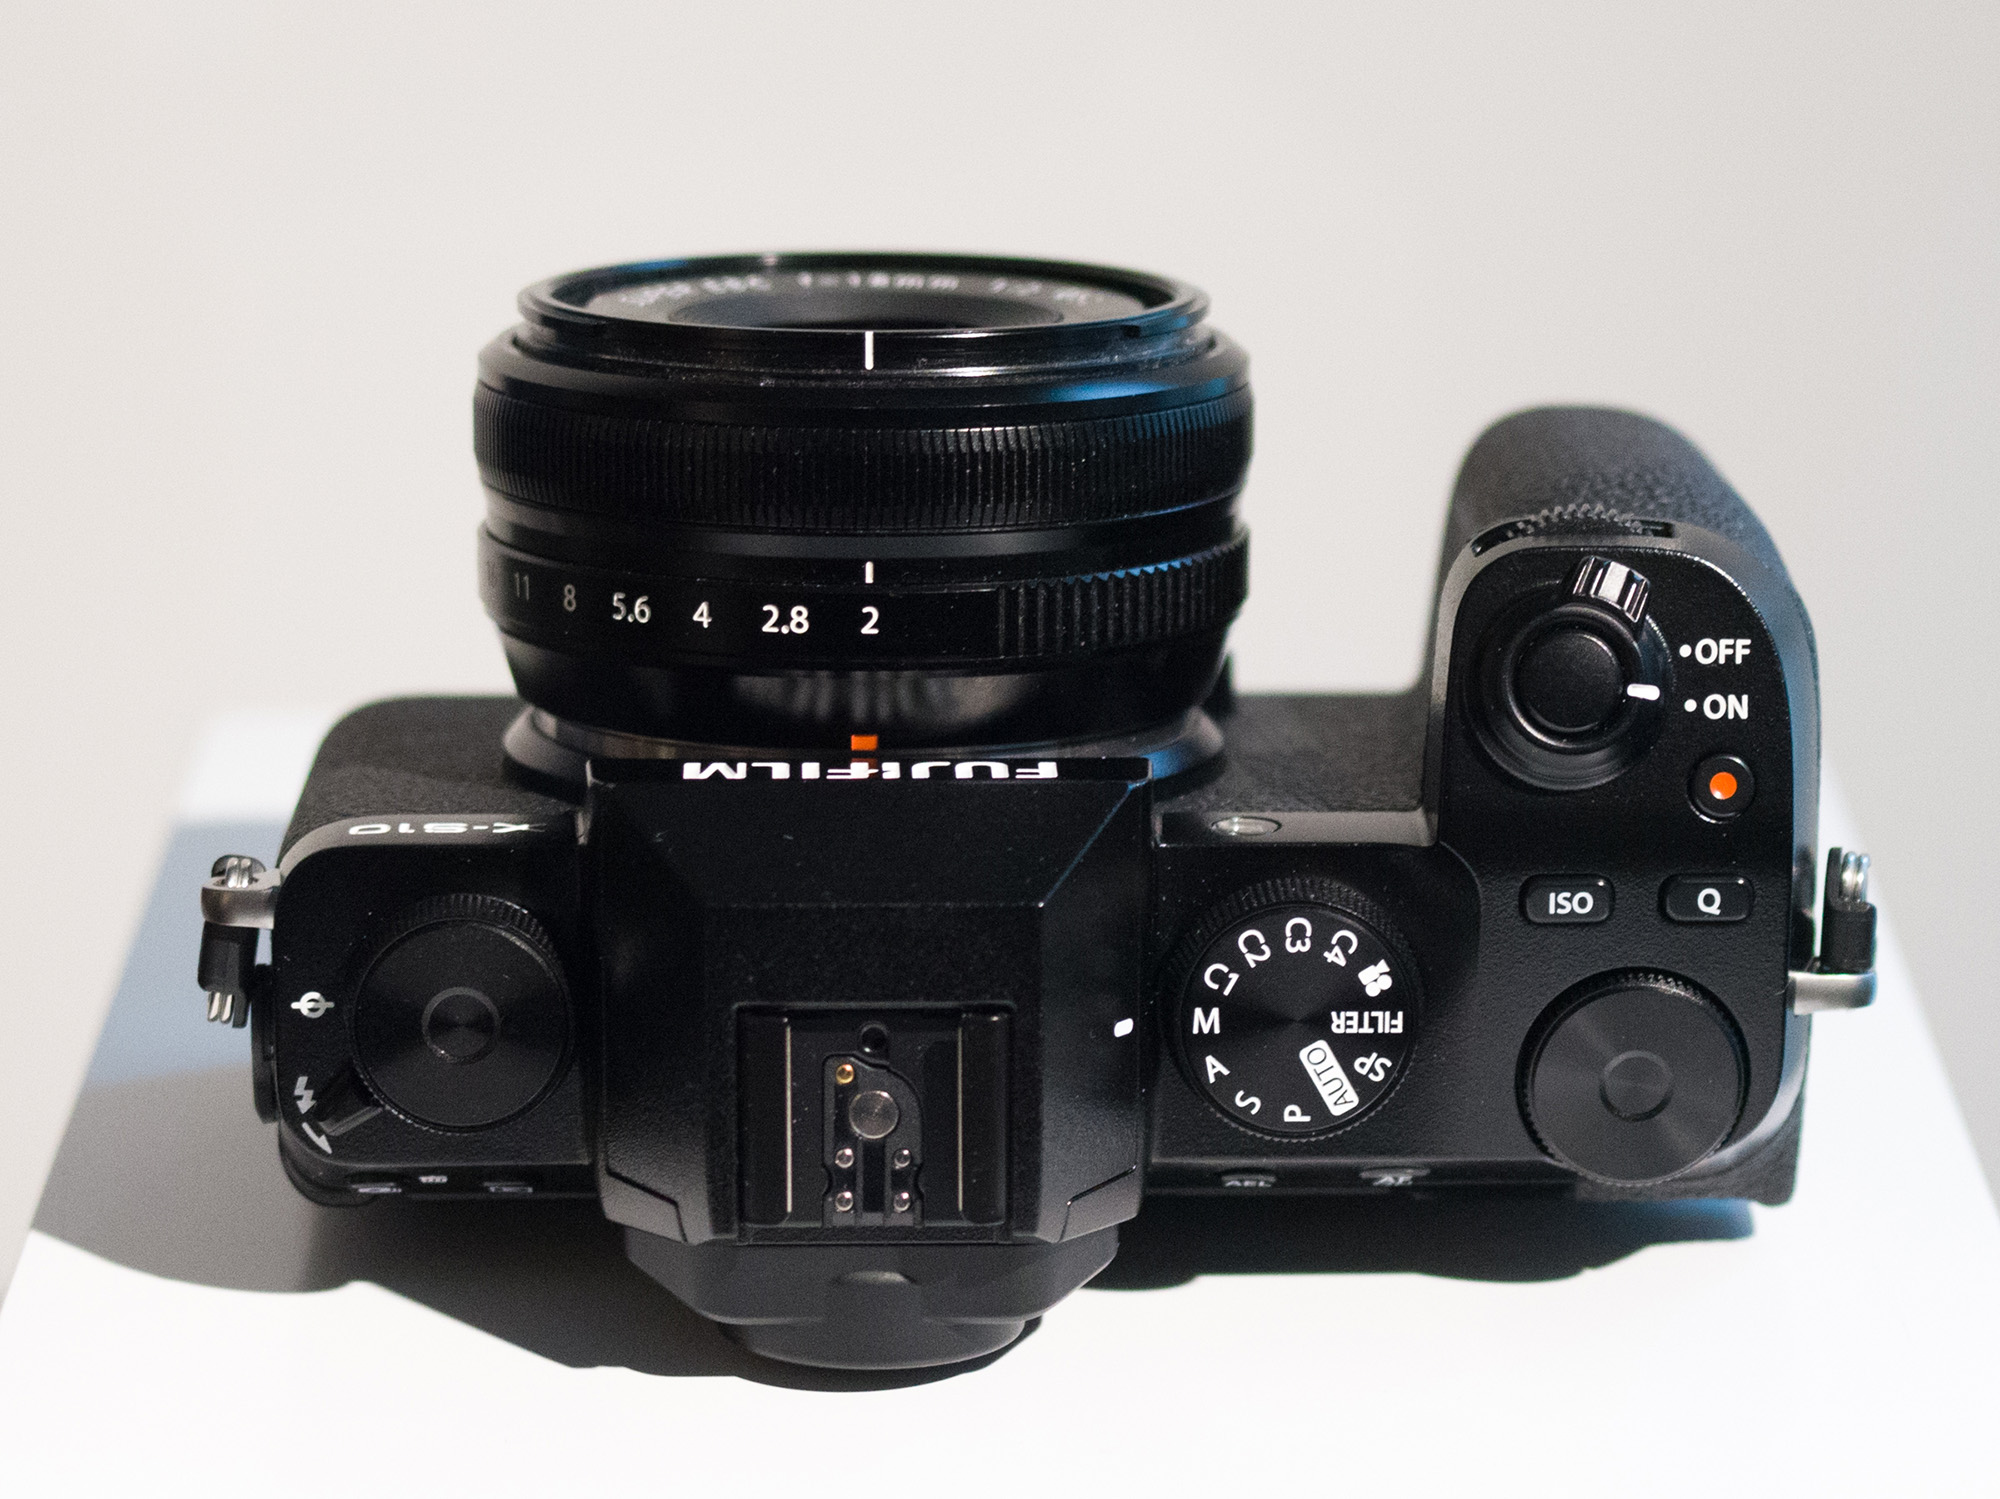 FUJIFILM XS10 Mirrorless Digital Camera (X-S10 Camera Body) B&H Photo